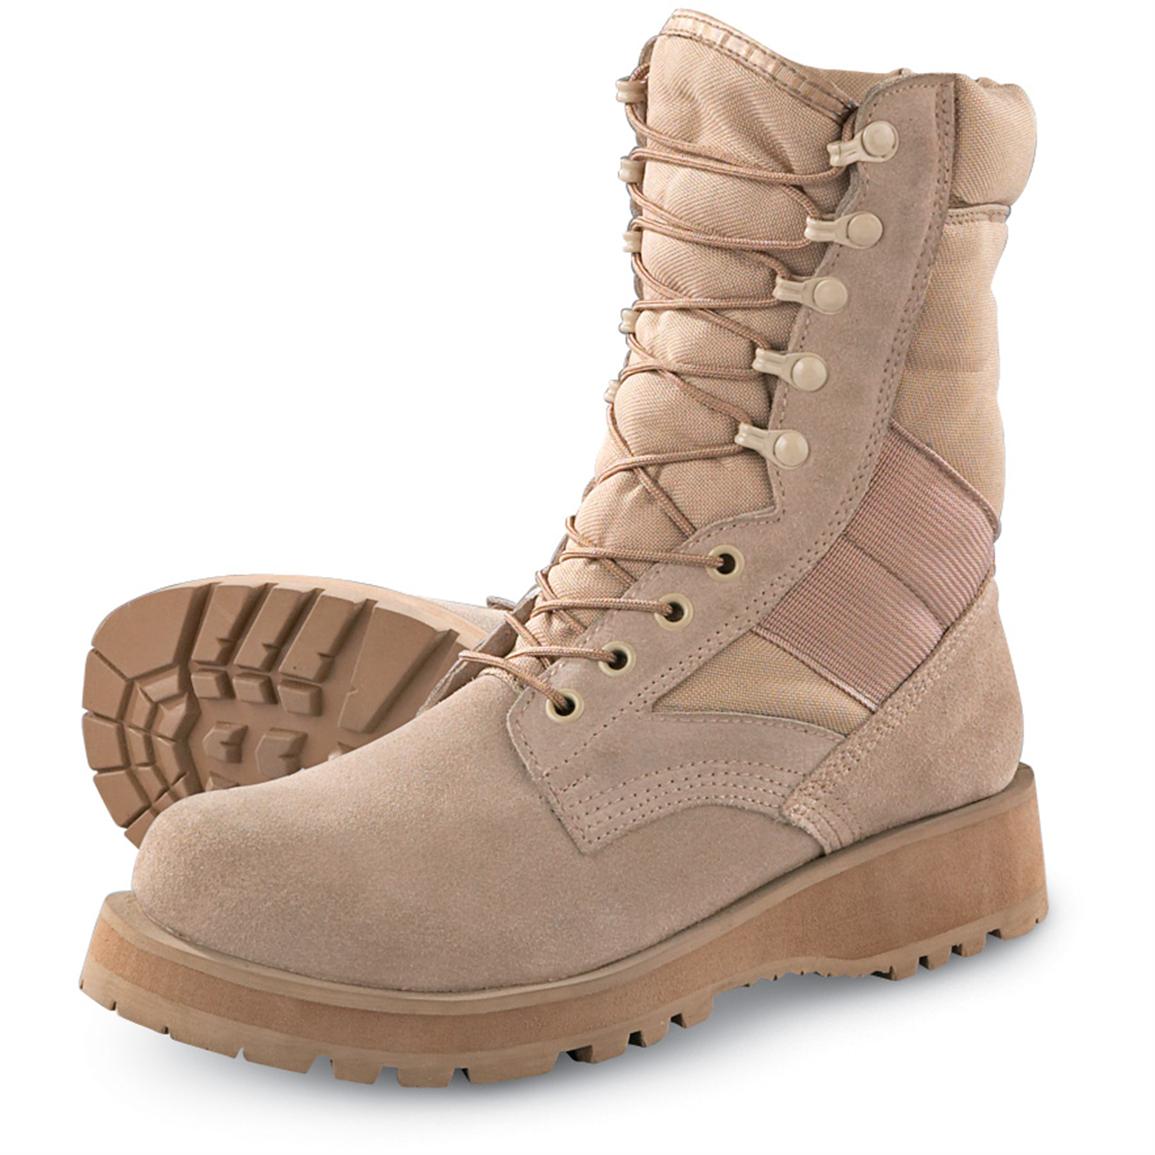 Men's Military style G.I. Jungle Boots, Desert Tan 119166, Combat & Tactical Boots at